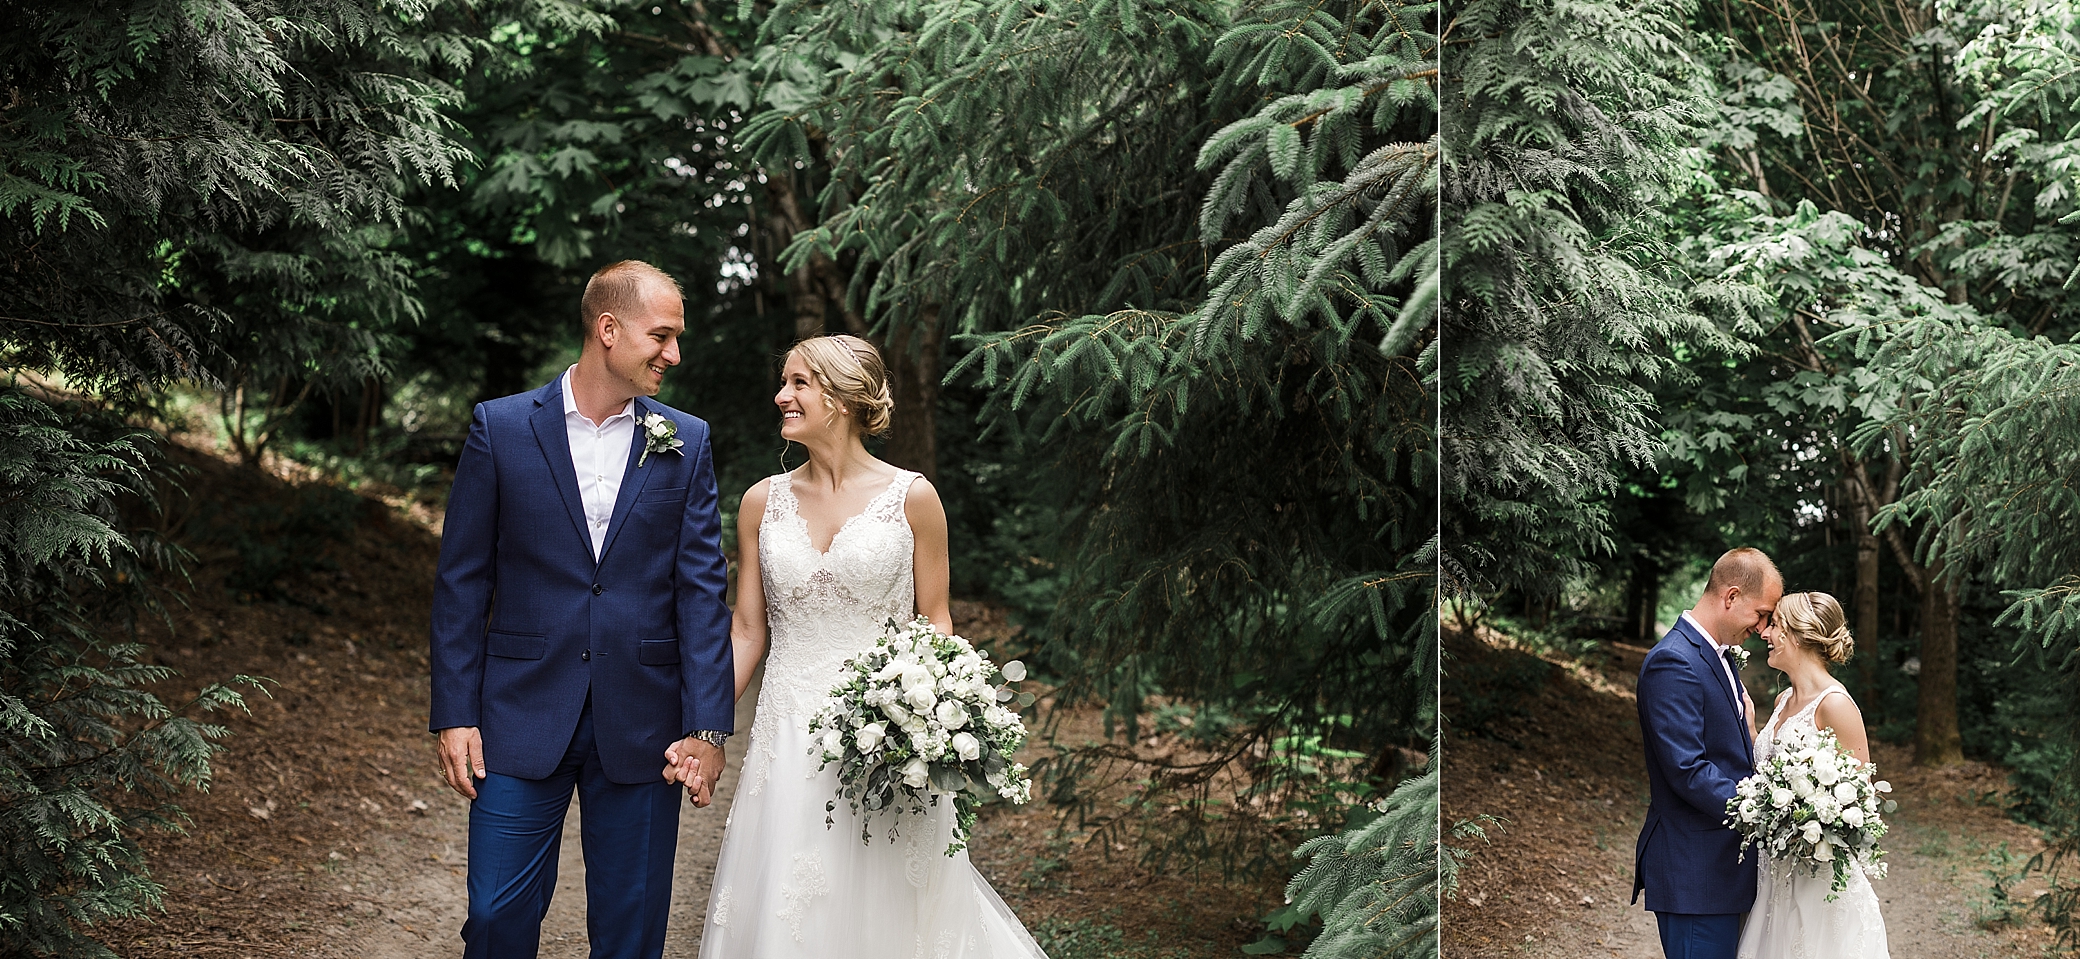 Bride and groom wedding portraits at Willows Lodge Wedding Venue | Megan Montalvo Photography 